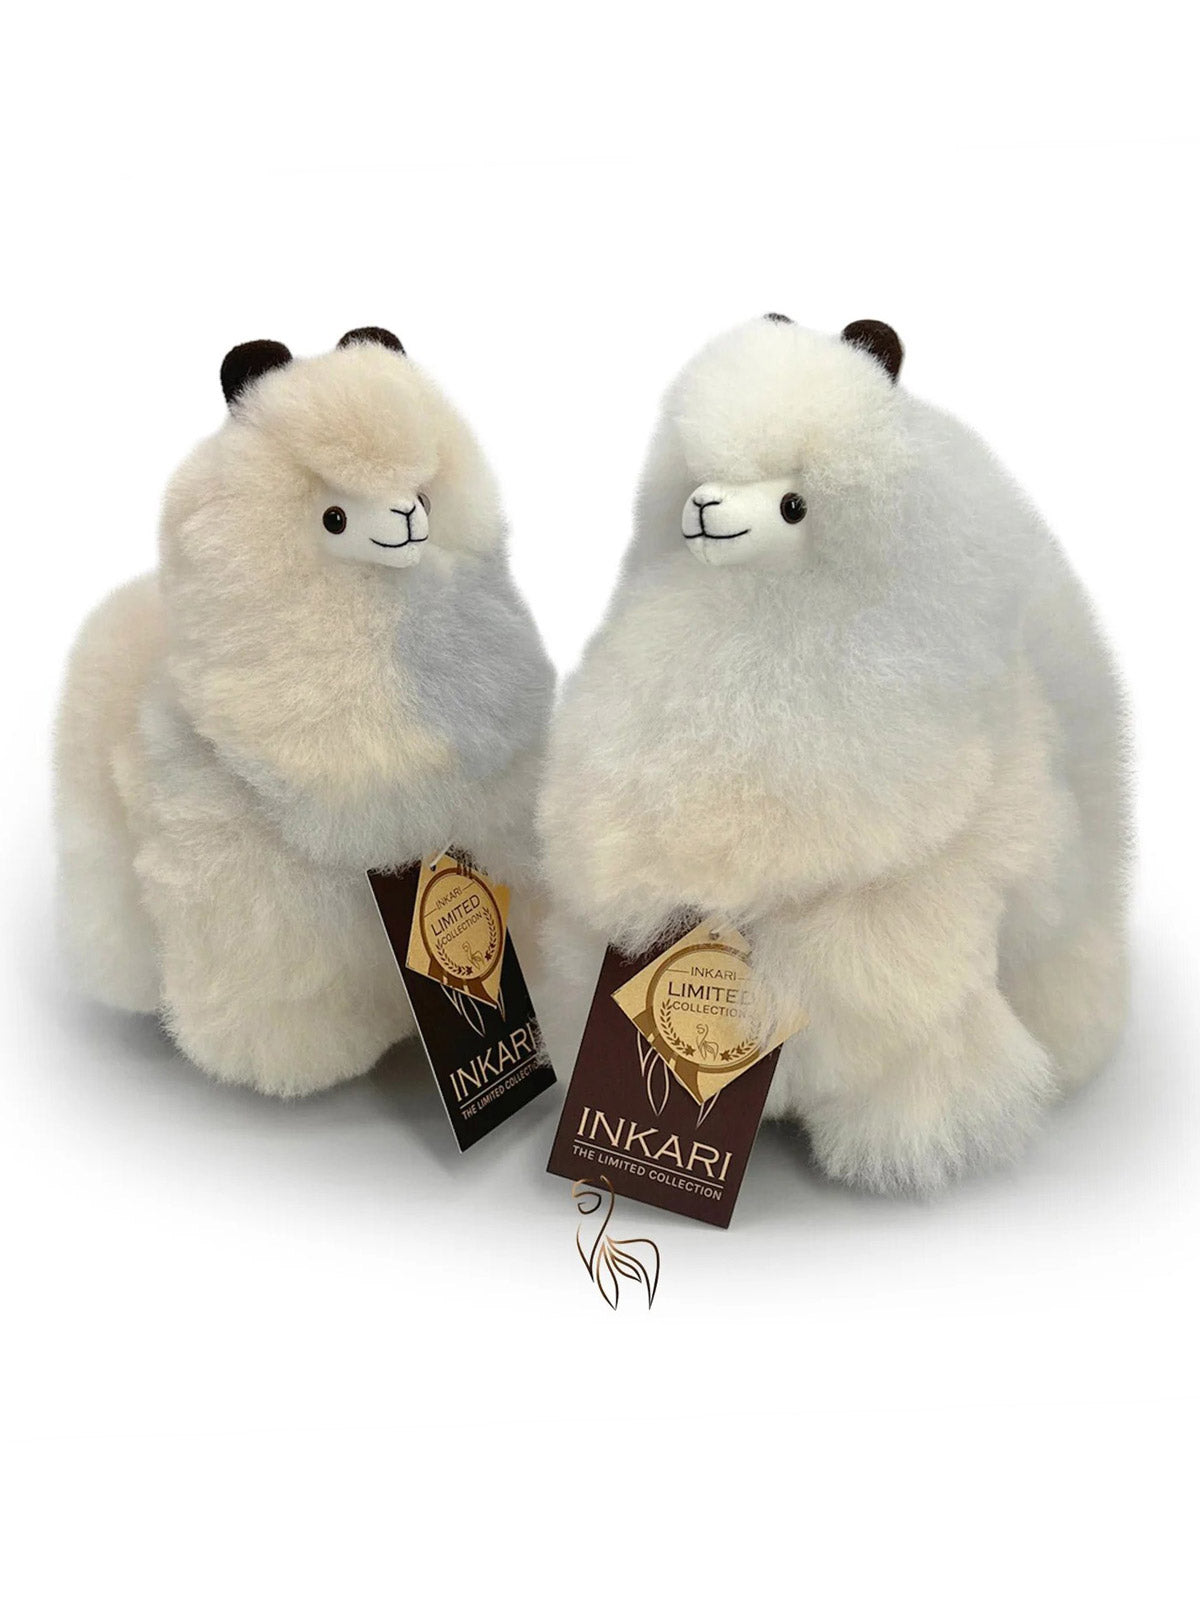 Inkari Alpaca soft toy-Limited Edition-PEARL-Small 23cm